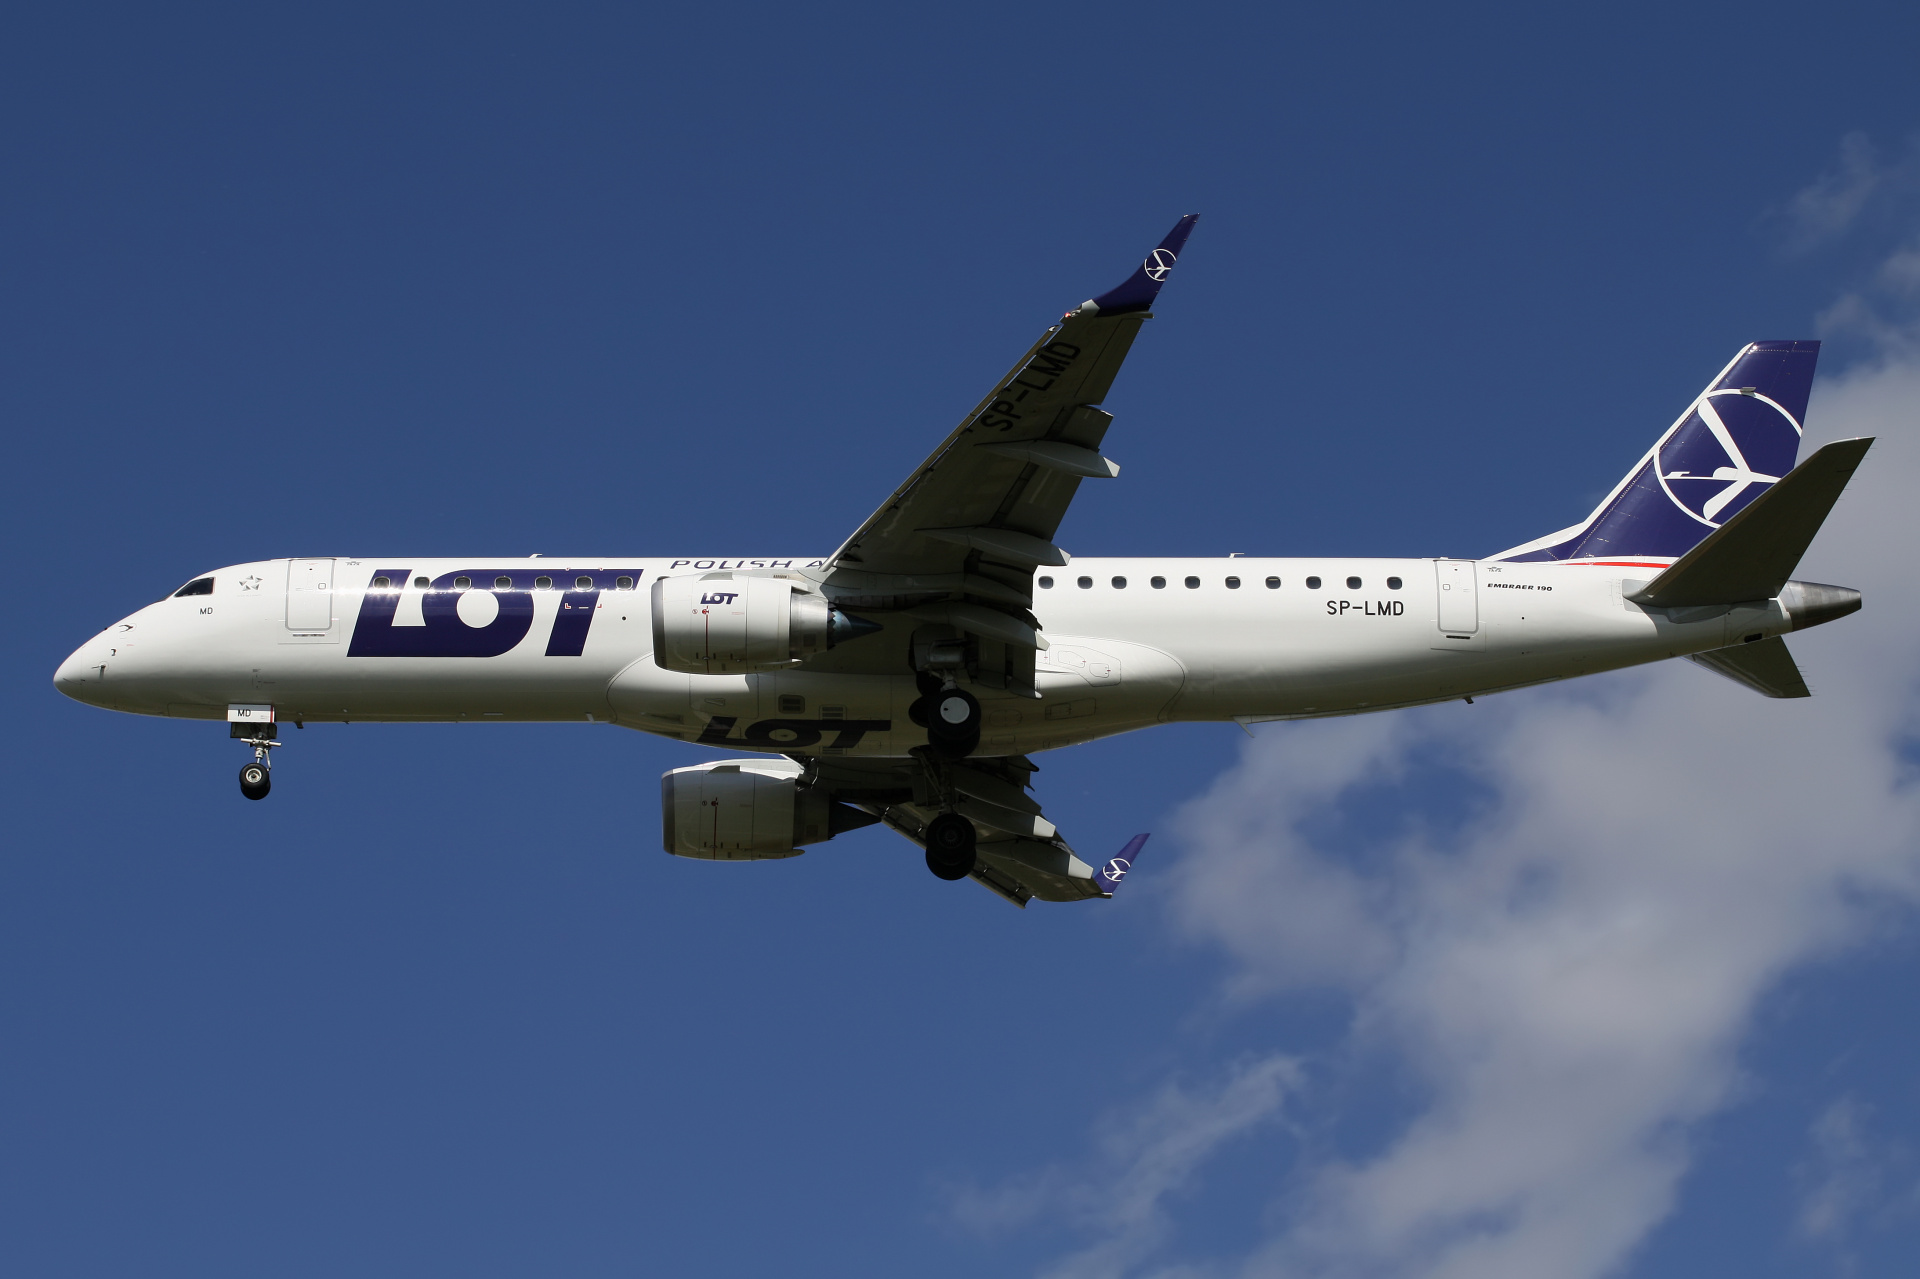 SP-LMD (Aircraft » EPWA Spotting » Embraer E190 » LOT Polish Airlines)